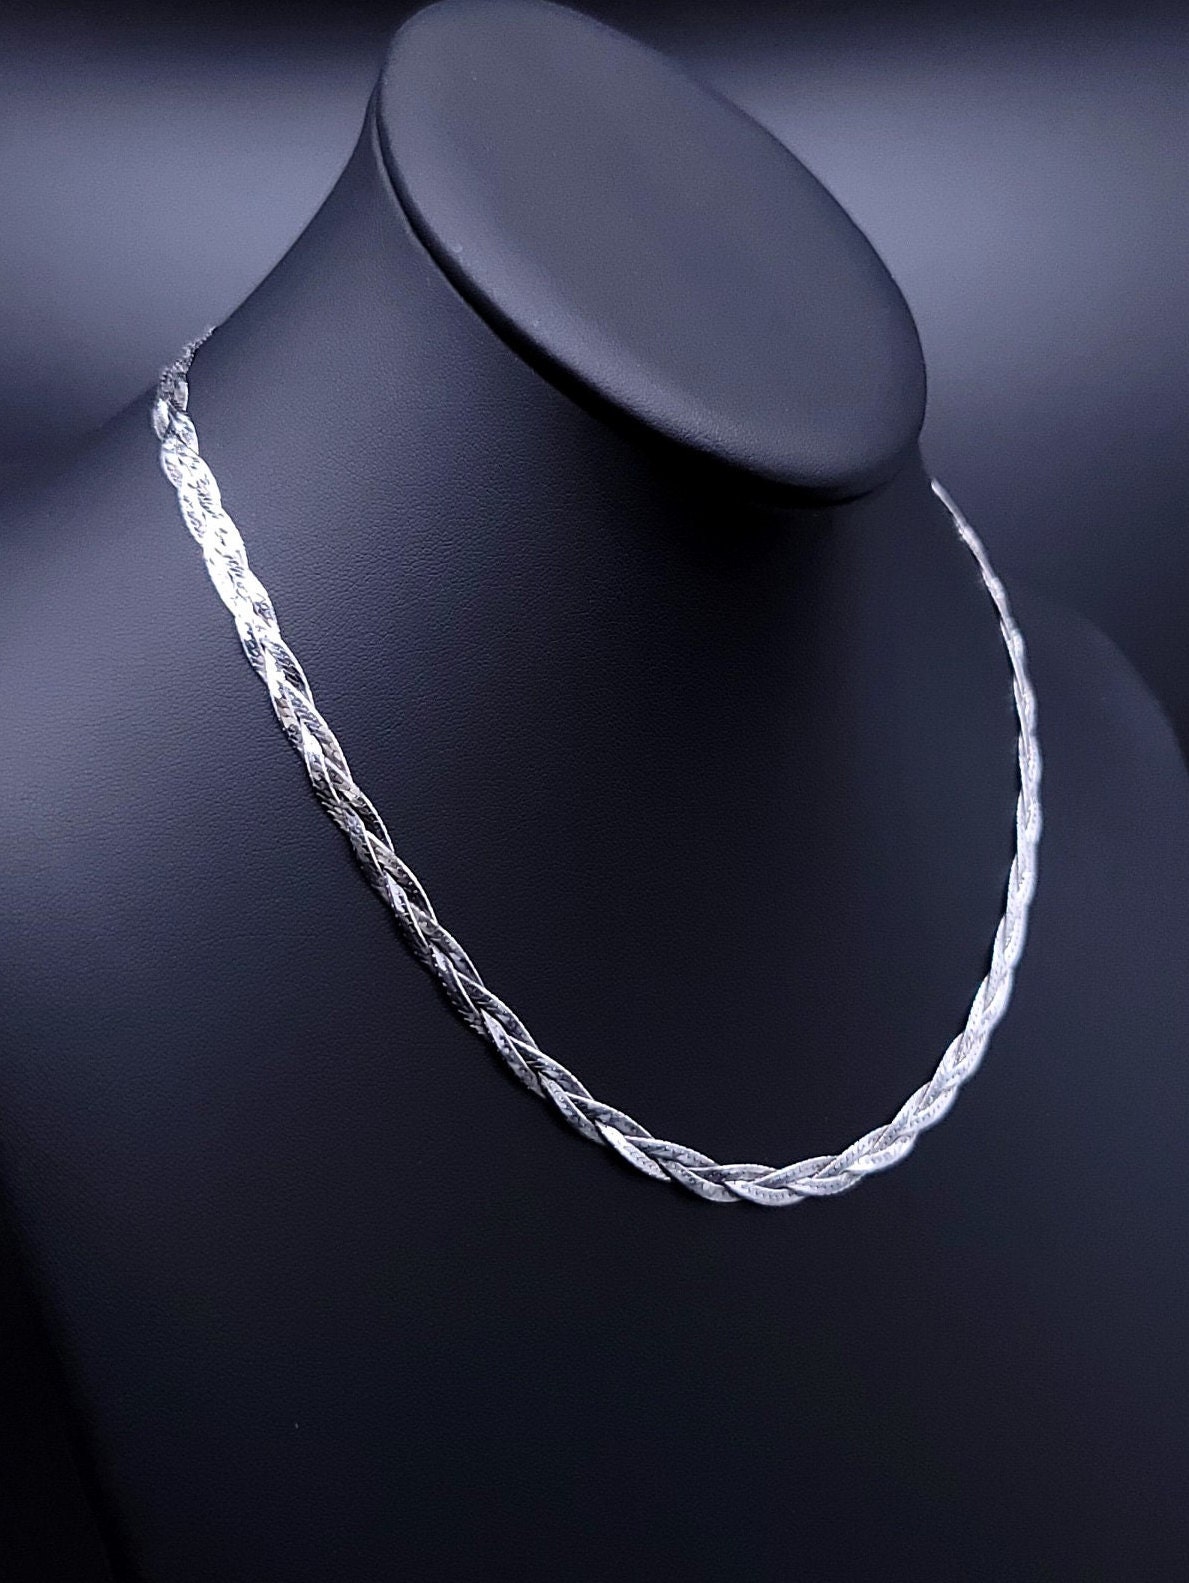 925 Sterling Silver AI Hallmark Italy Classic Italian 4mm Herringbone 18 Silver Necklace Vintage Herringbone Necklace